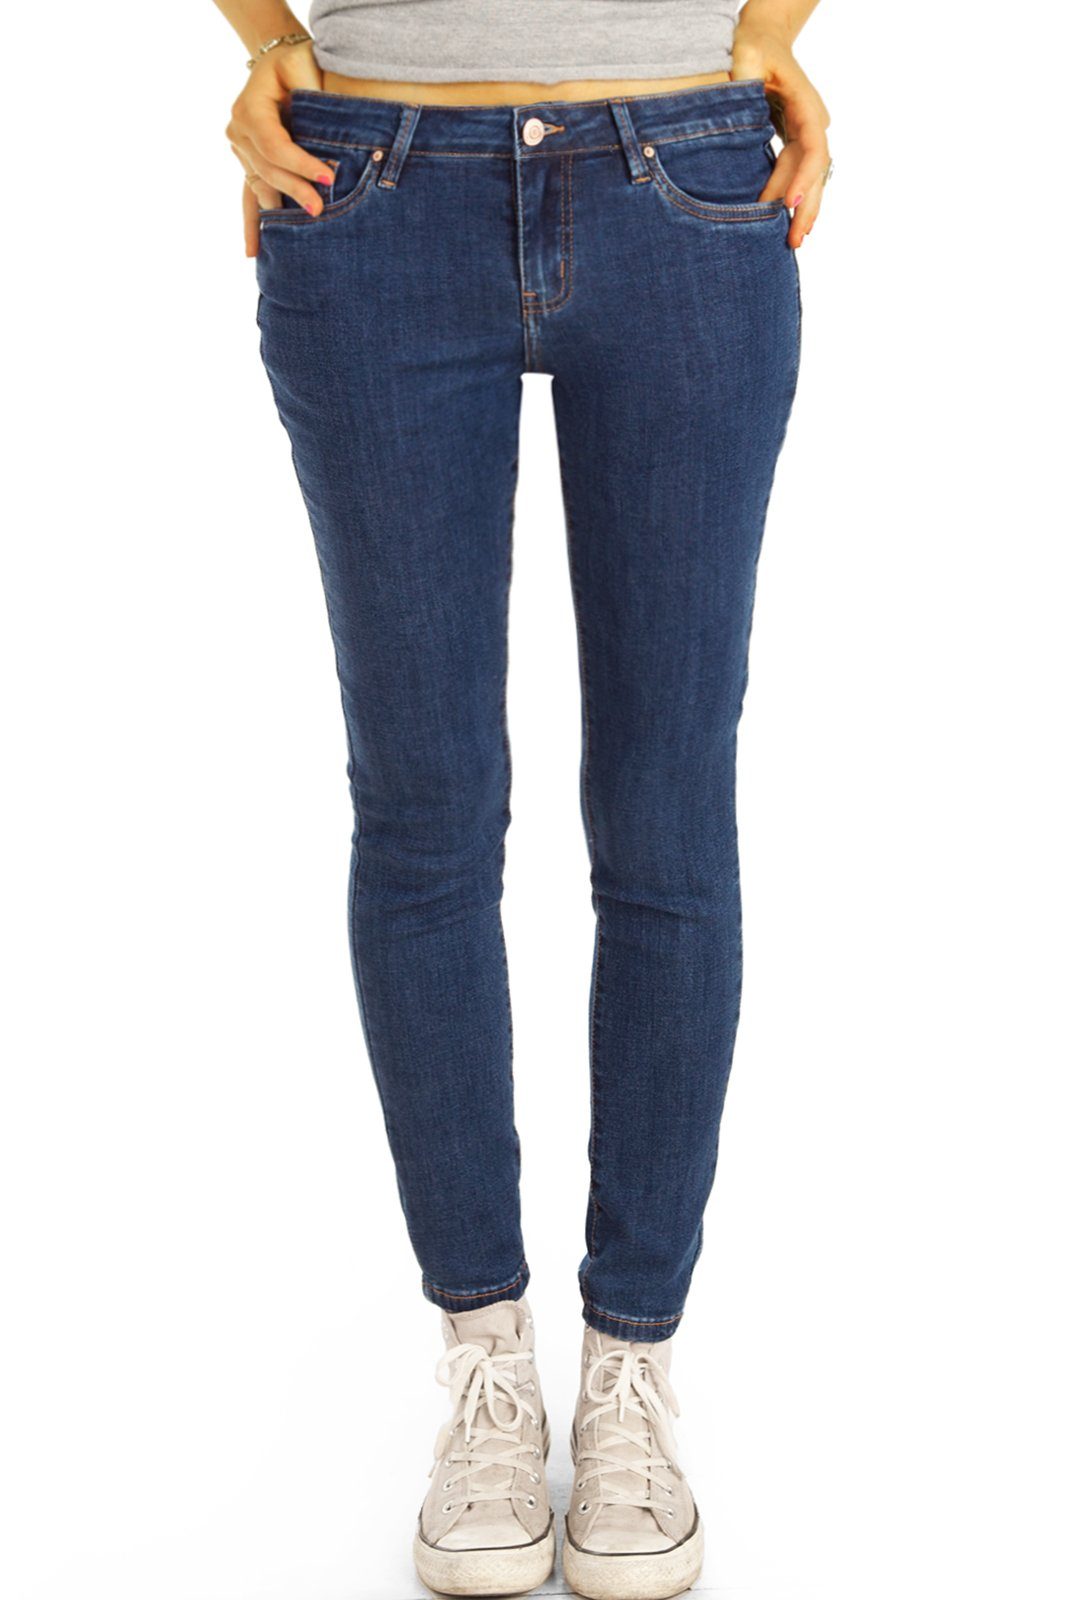 be styled Low-rise-Jeans Hüftjeans Skinny Hose - Stretch slim Röhrenjeans - Damen- j27p-1 mit Stretch-Anteil, 5-Pocket-Style dunkelblau